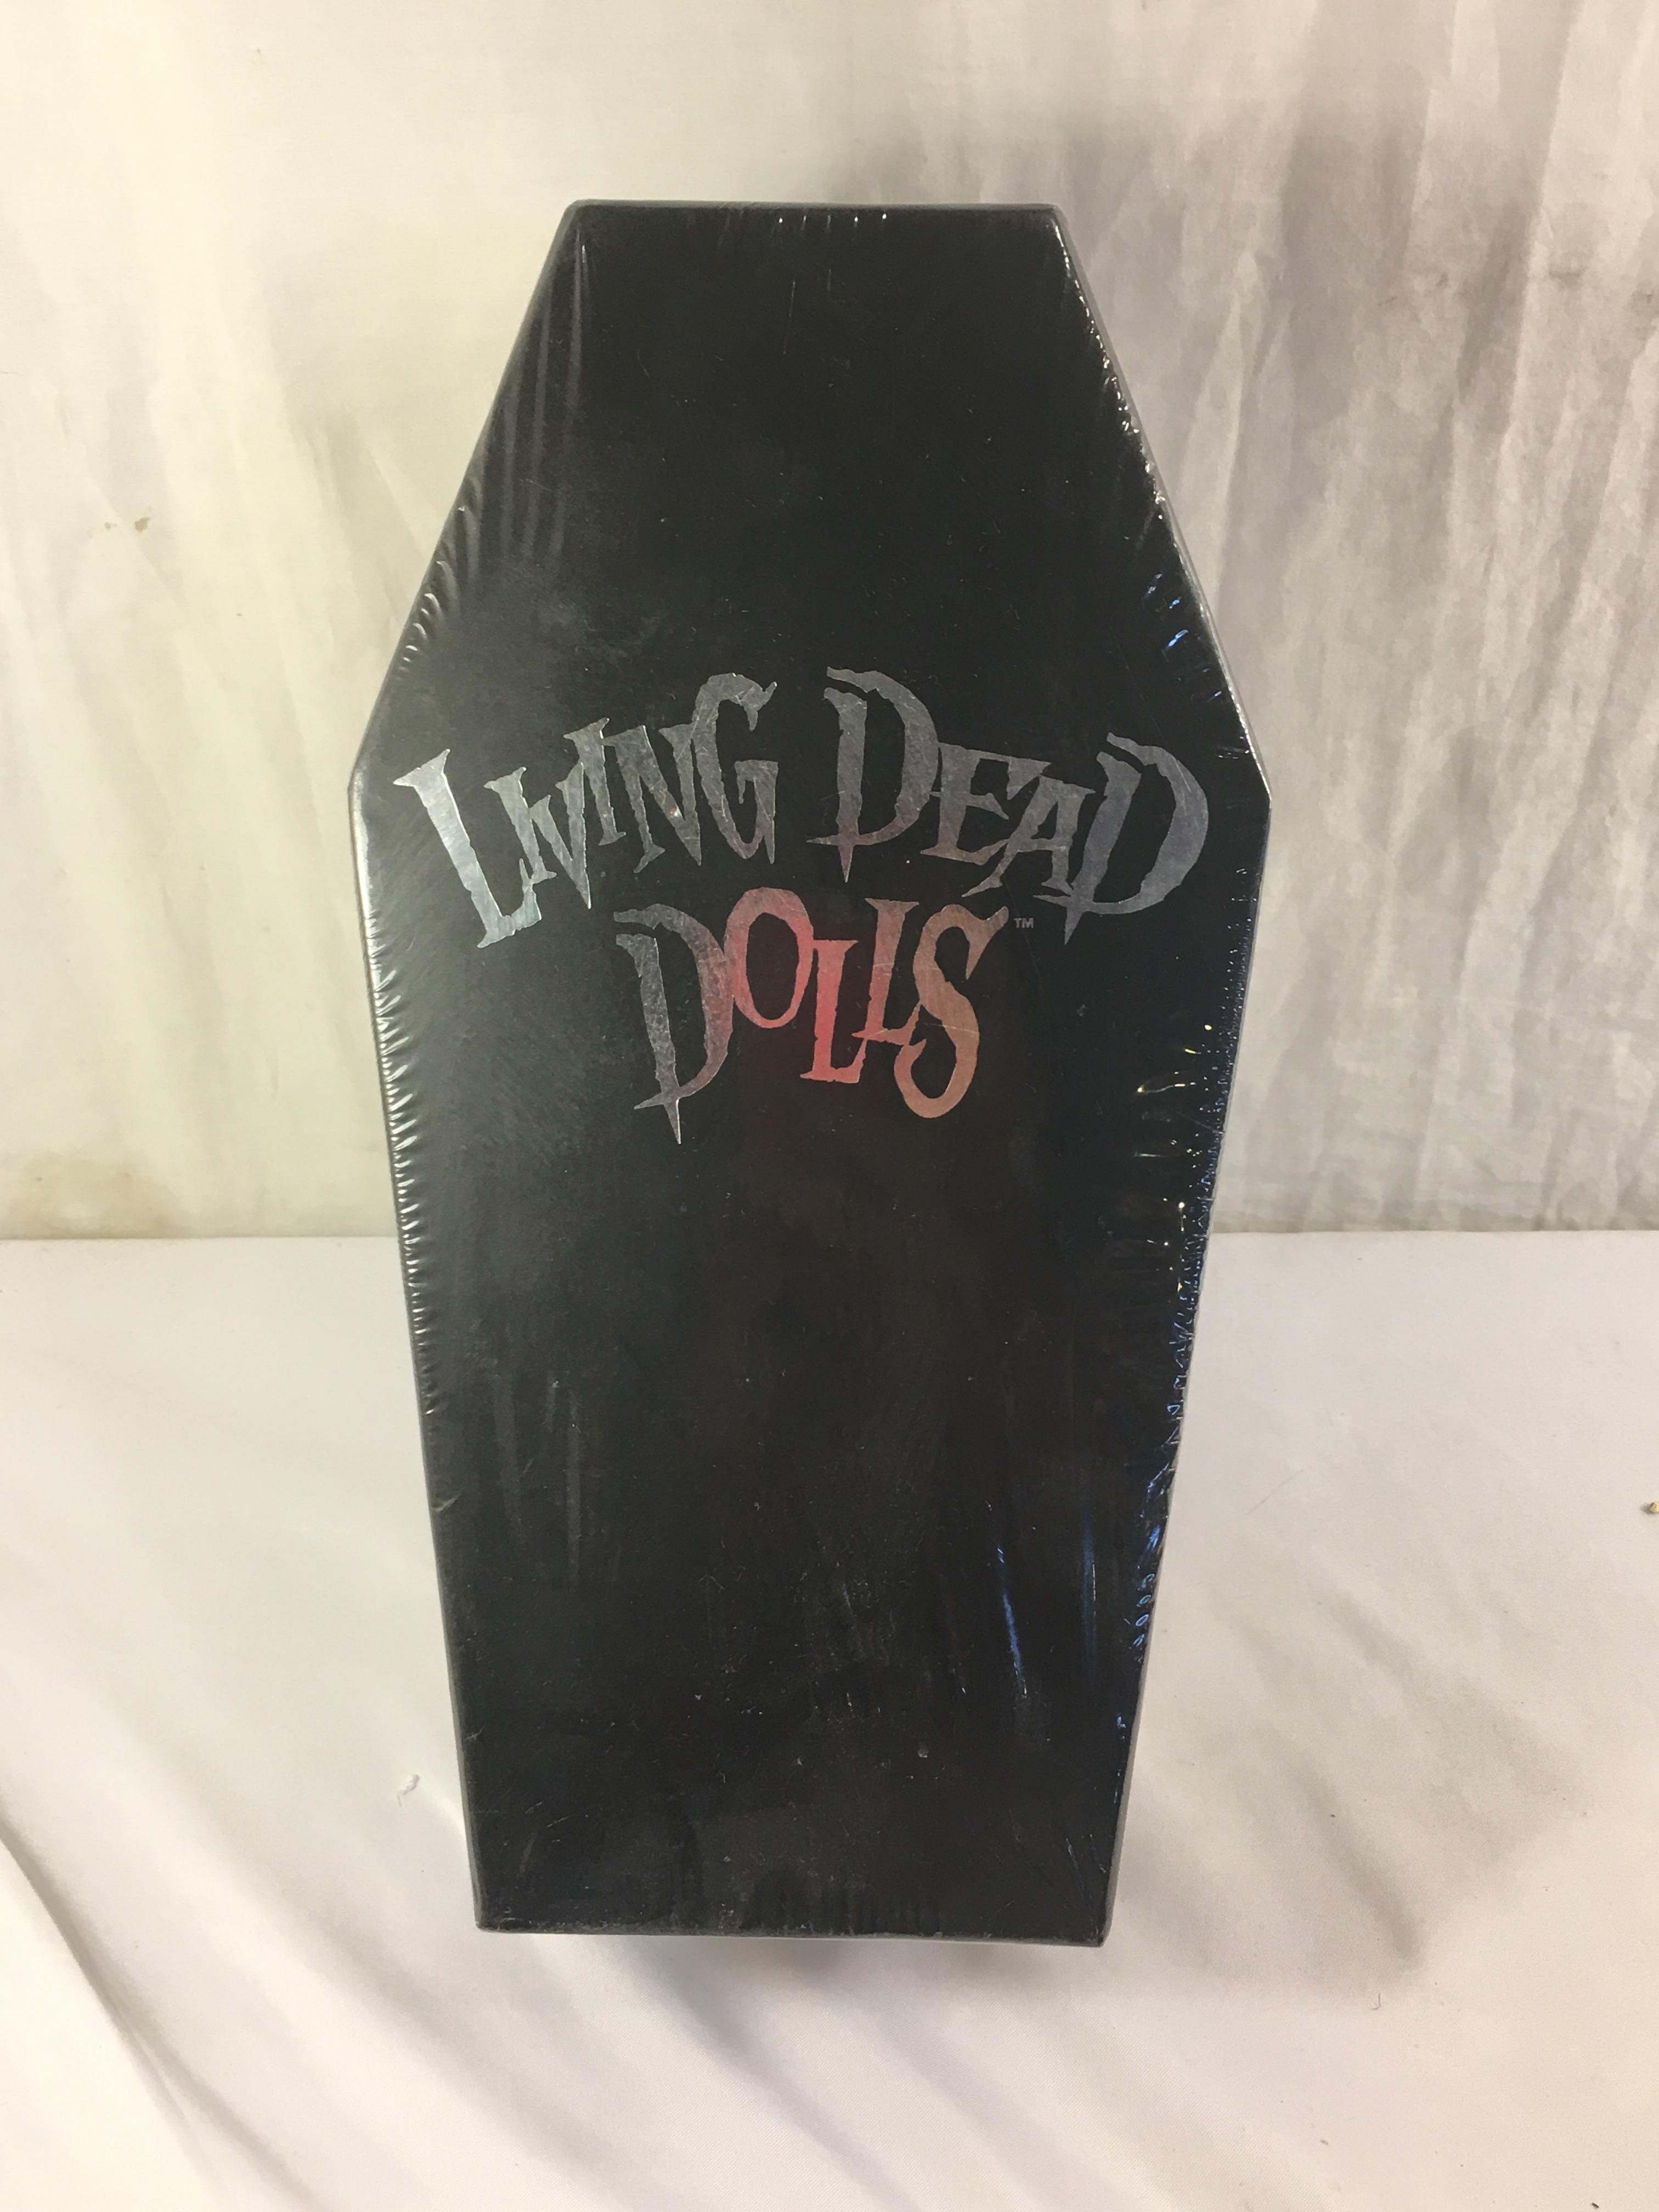 New Sealed Mezco Toyz Living Dead Dolls Ernest Lee Rotten Doll Box Size: 12"Tall Box